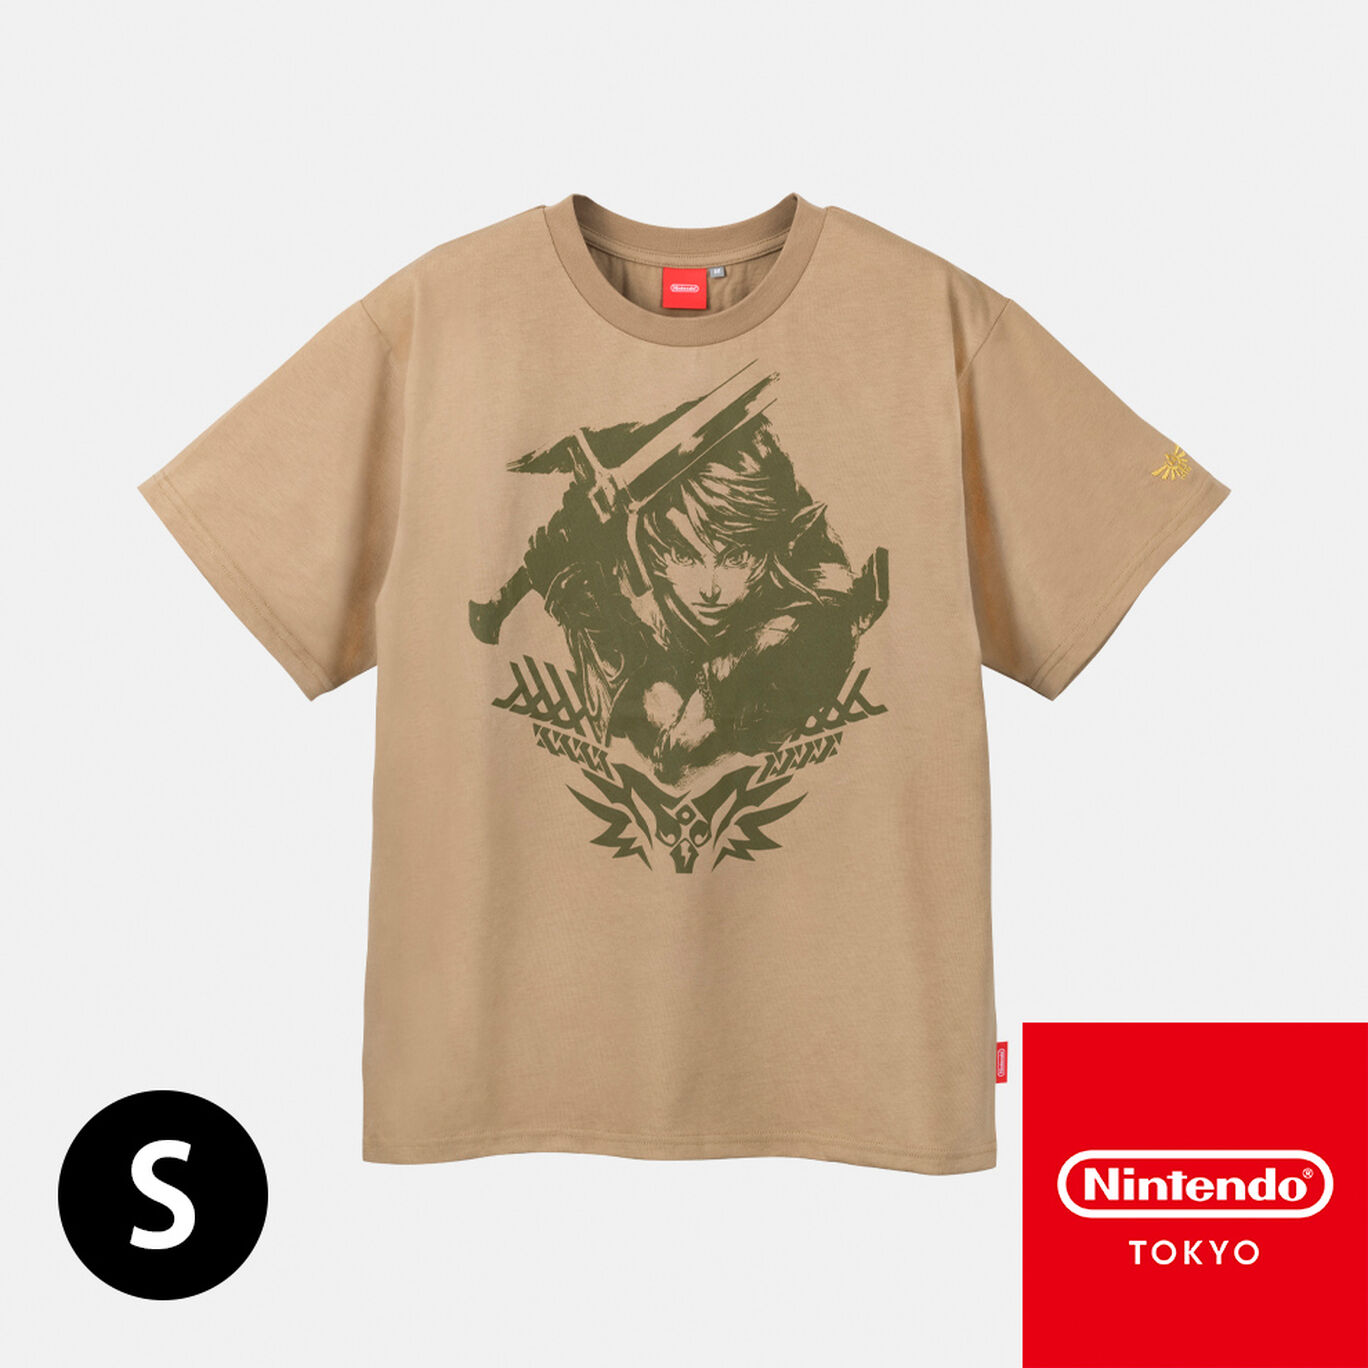 Tシャツ トライフォース リンク S ゼルダの伝説【Nintendo TOKYO取り扱い商品】